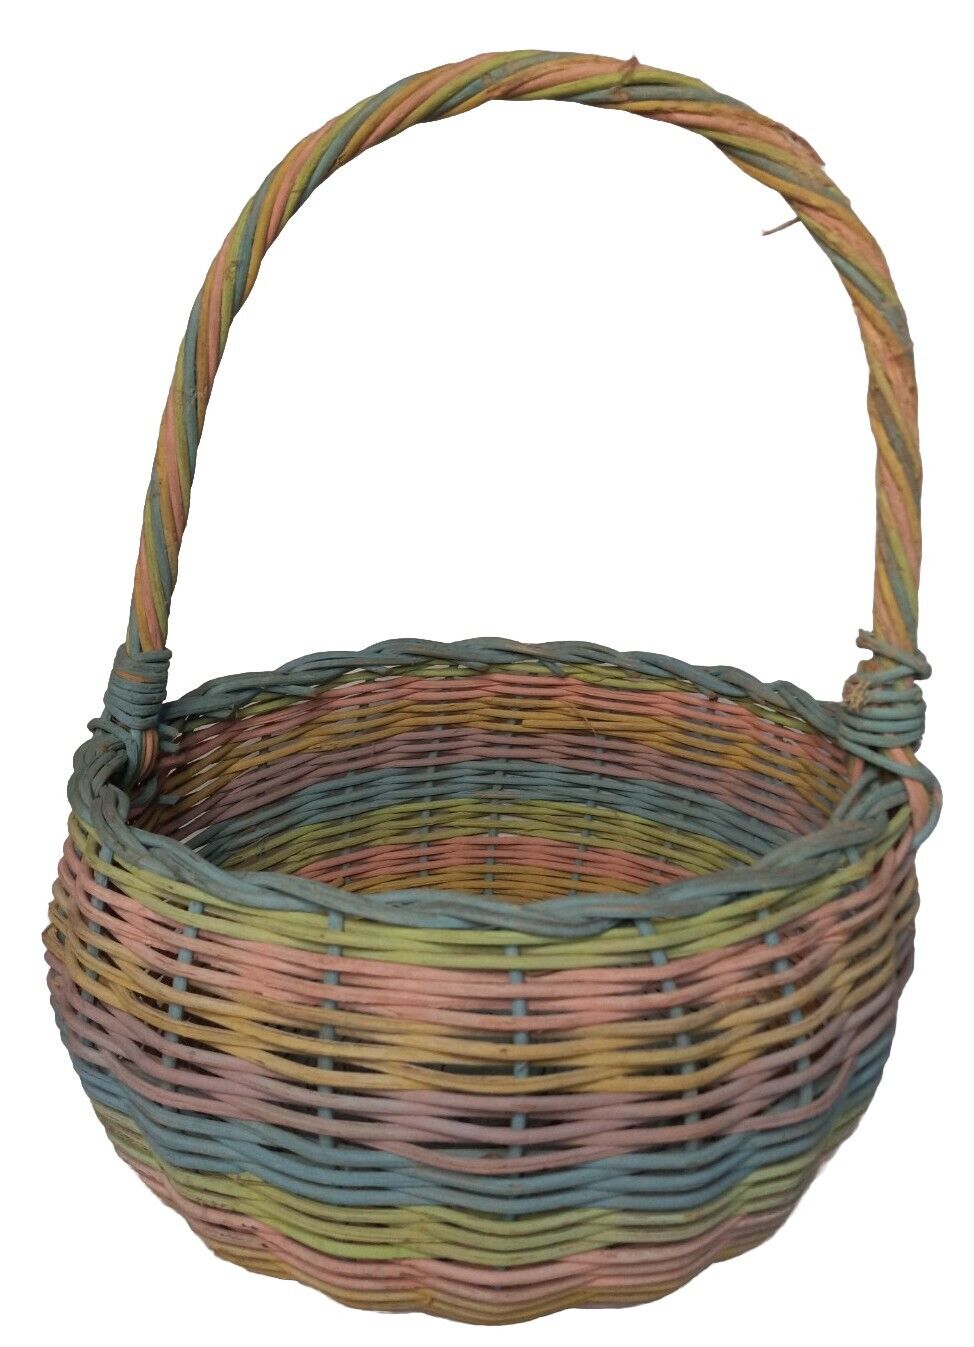 Vintage Pastel Multi-Color Basket Wicker Rattan Woven Round